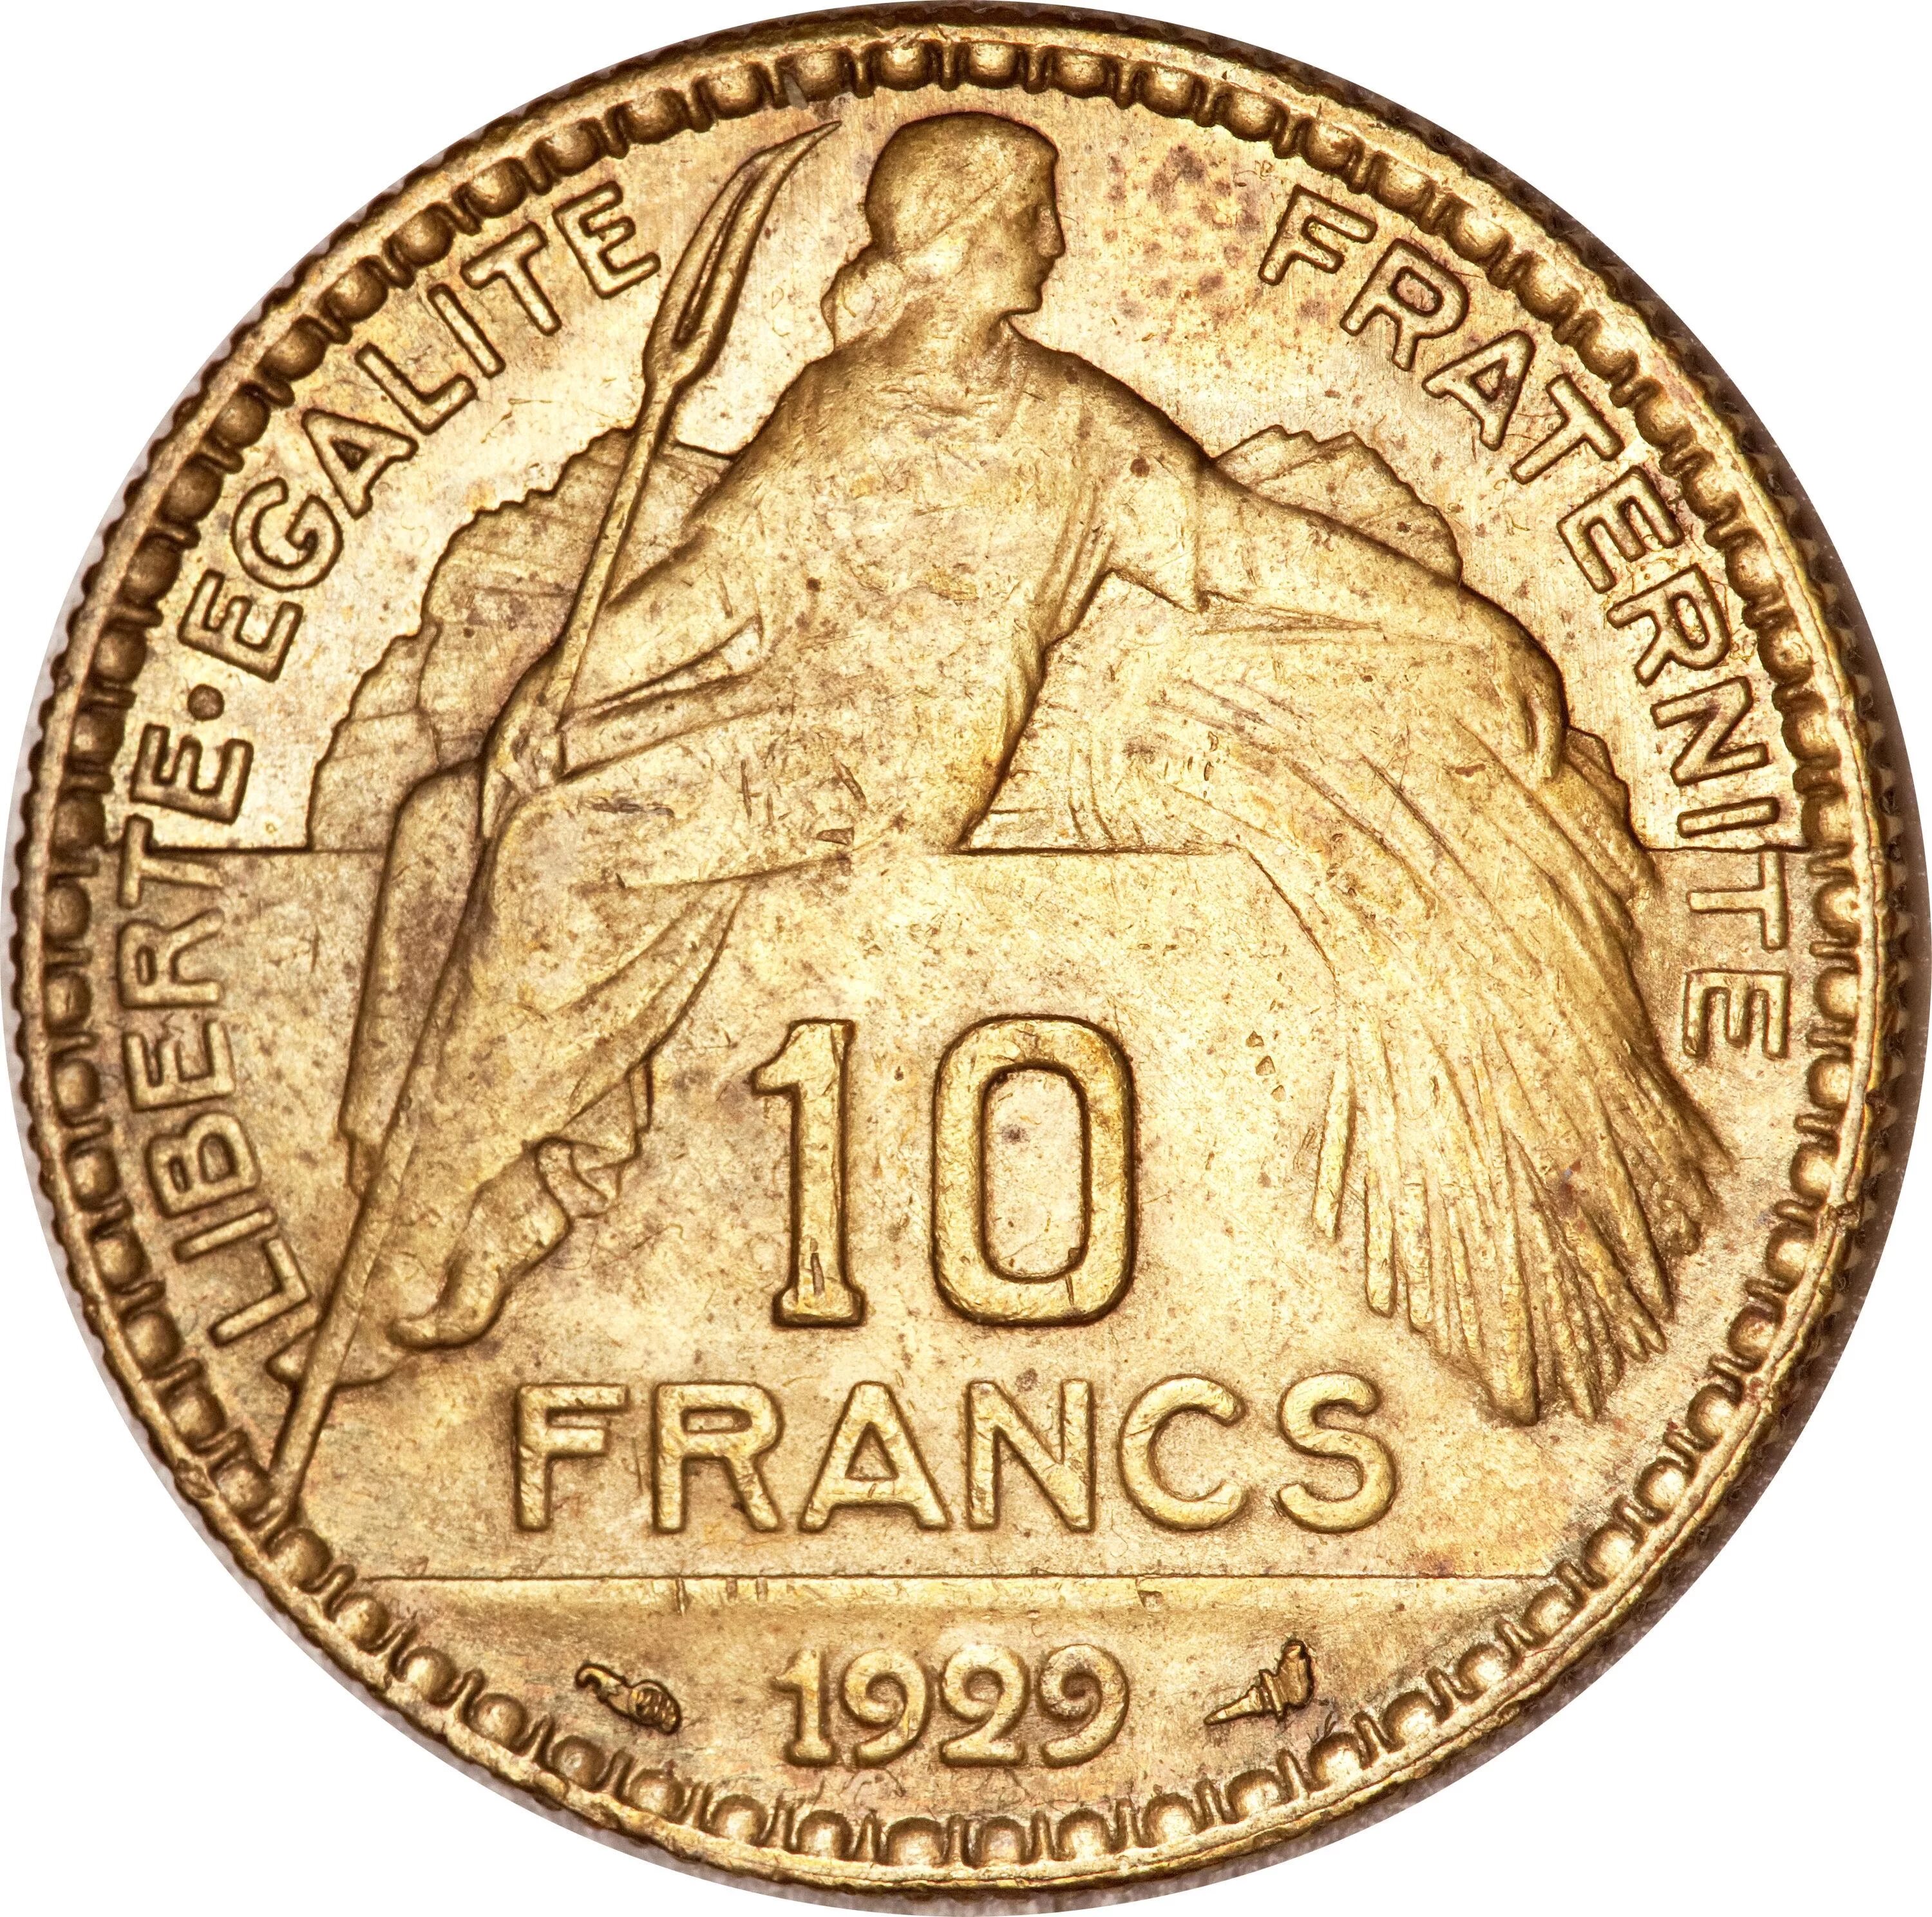 French x. Republique монета. Francaise монета. Fraternite монета 10. Liberté égalité Fraternité монета.